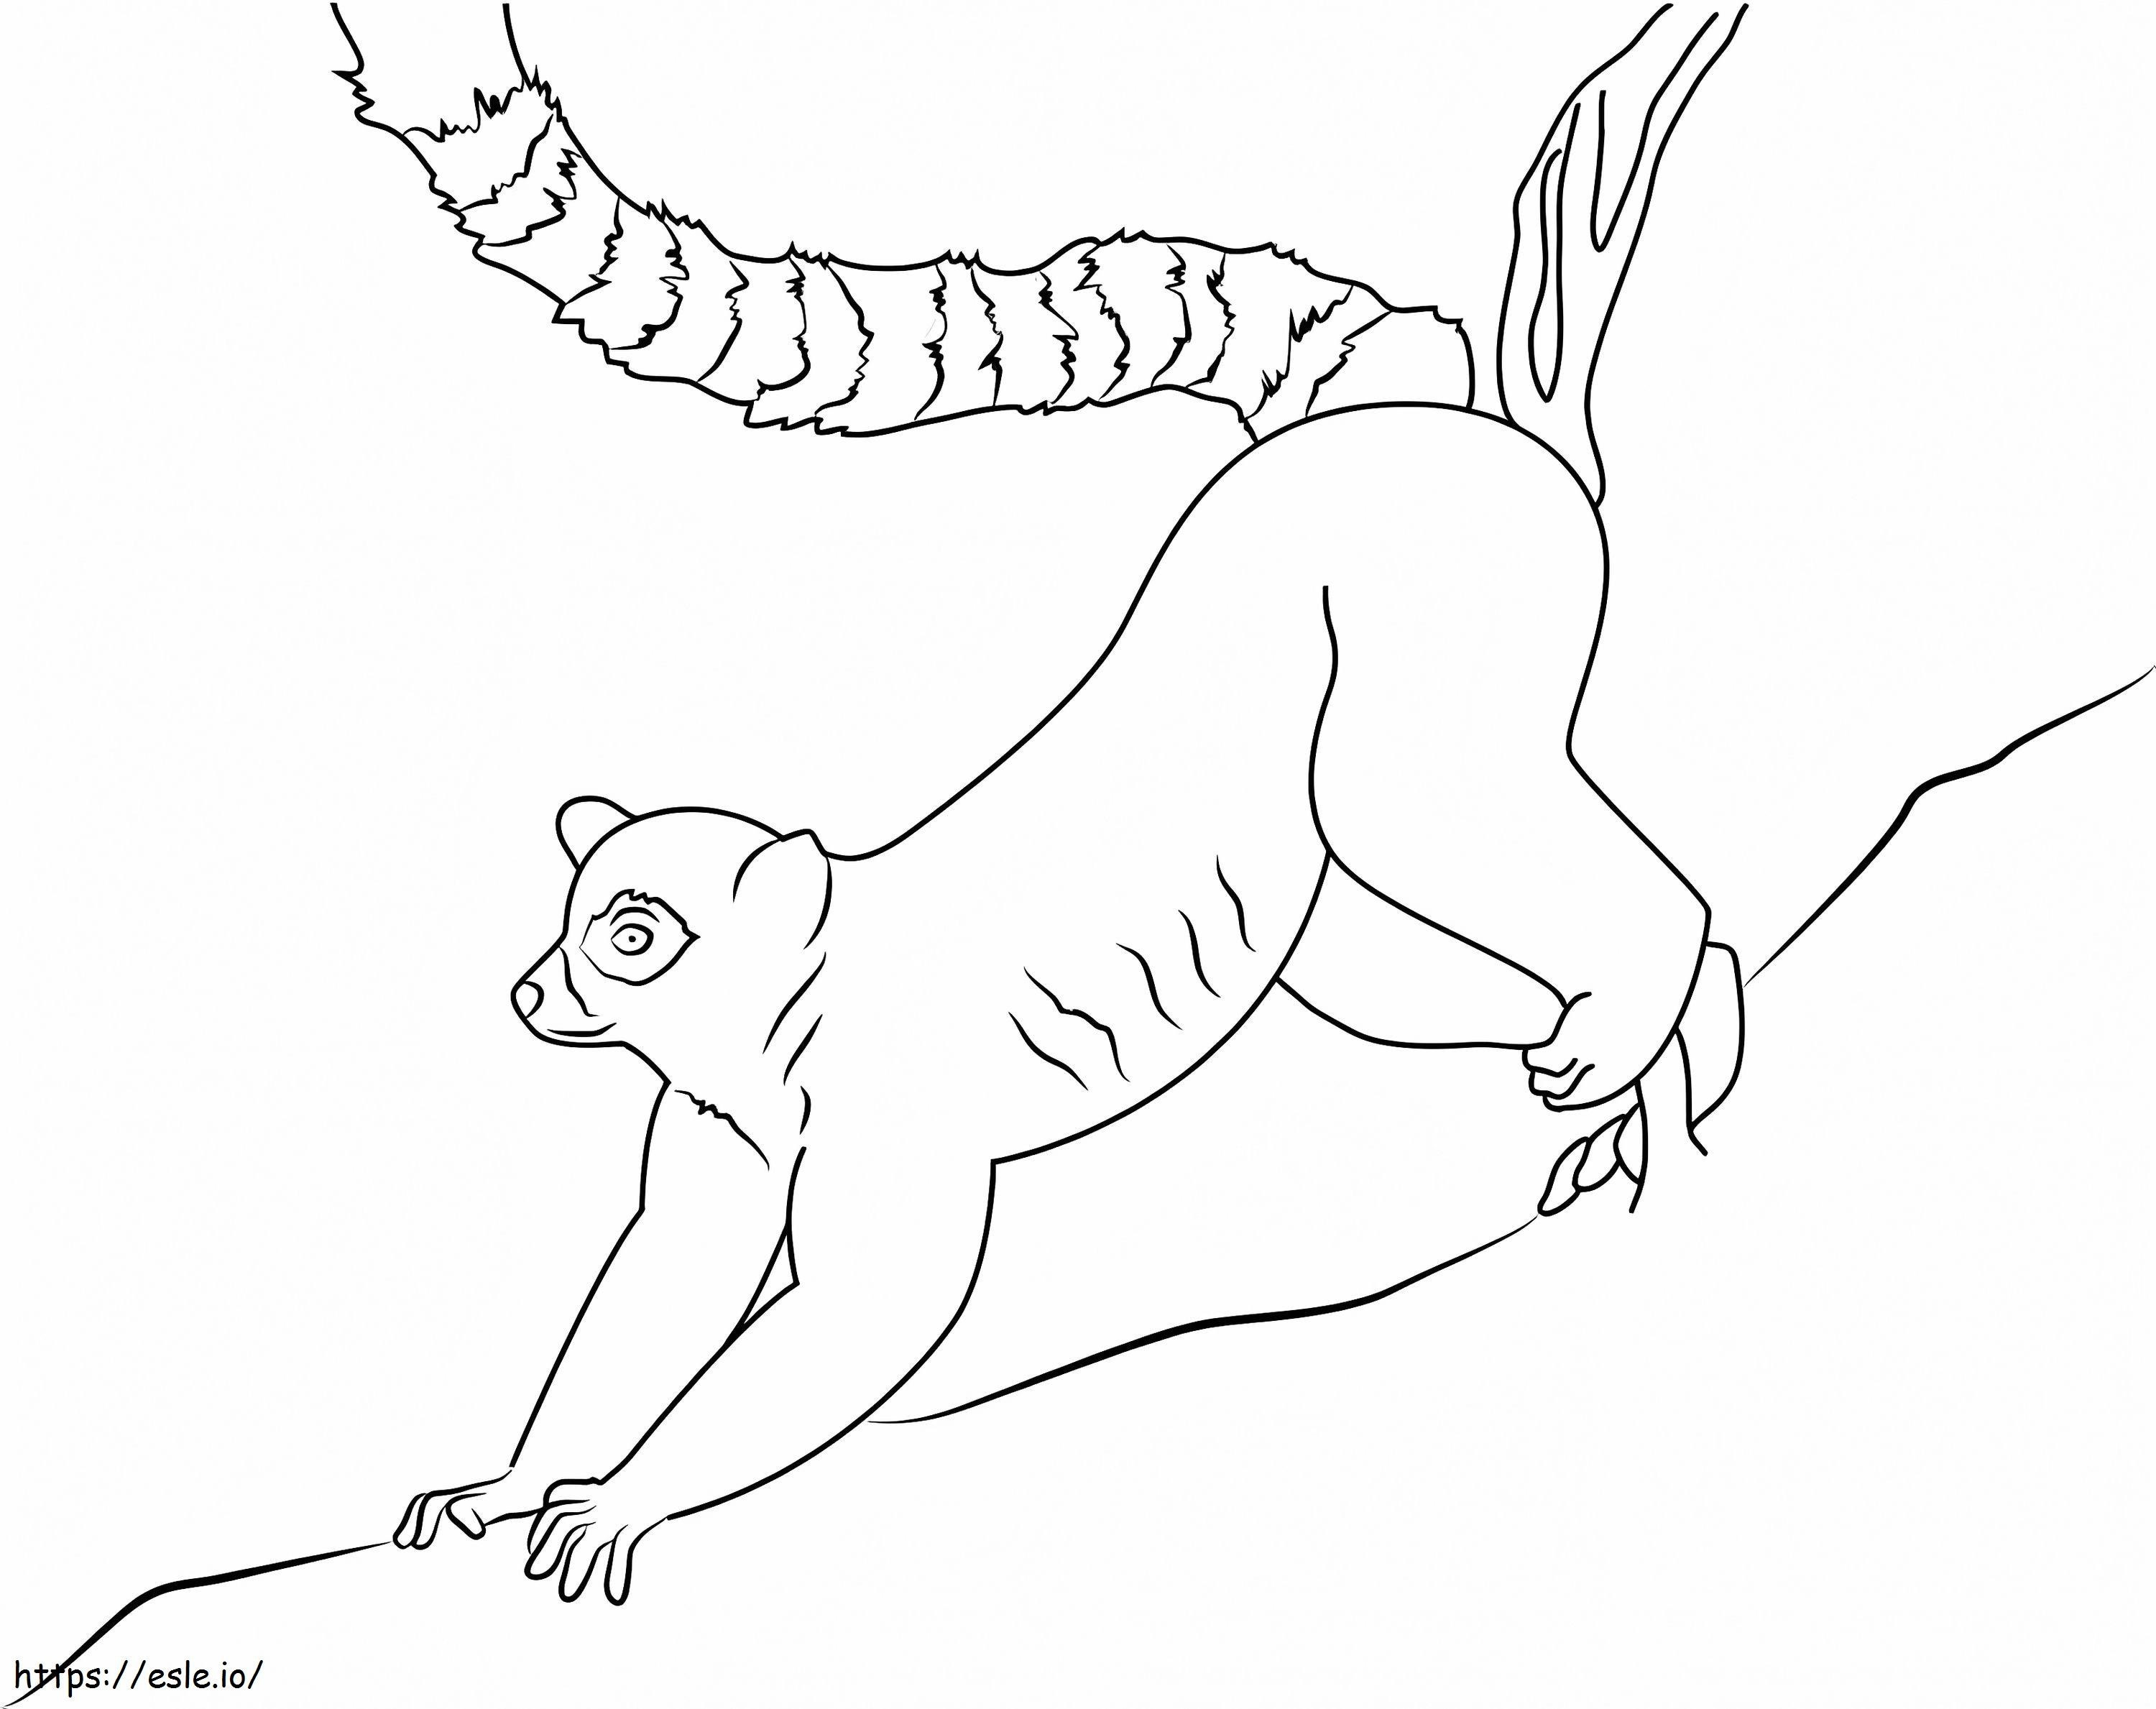 Lemur Ring coloring page